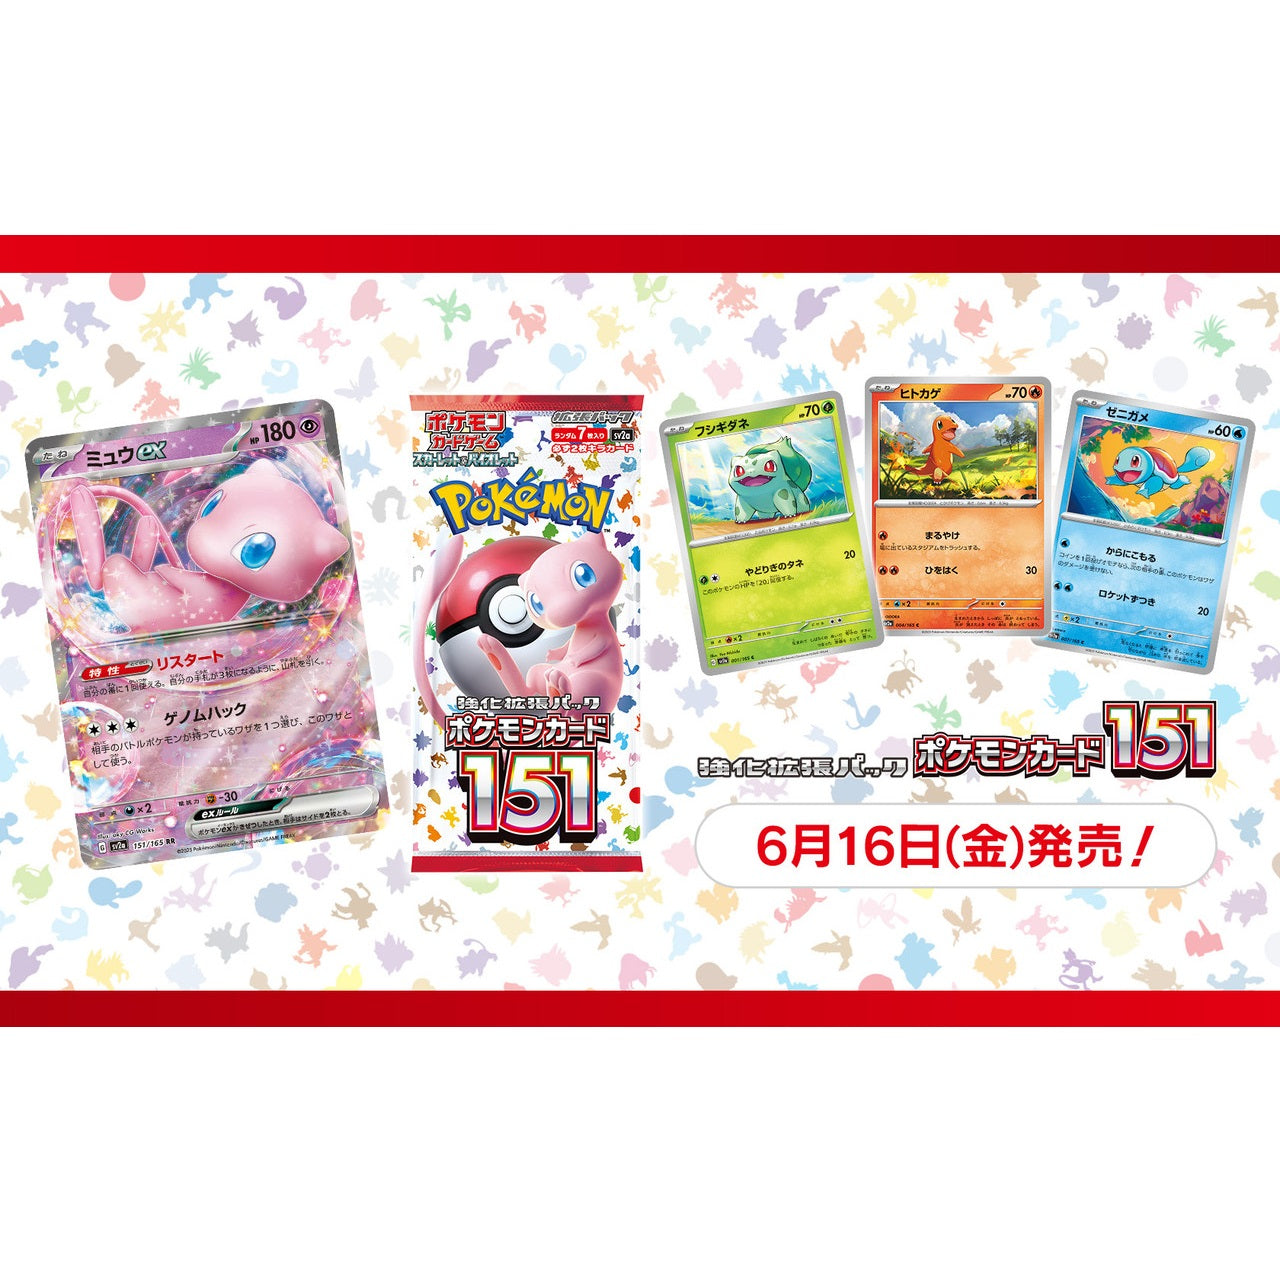 Pokemon Card Scarlet & Violet Pokemon Card 151 sv2a Booster Box Japane